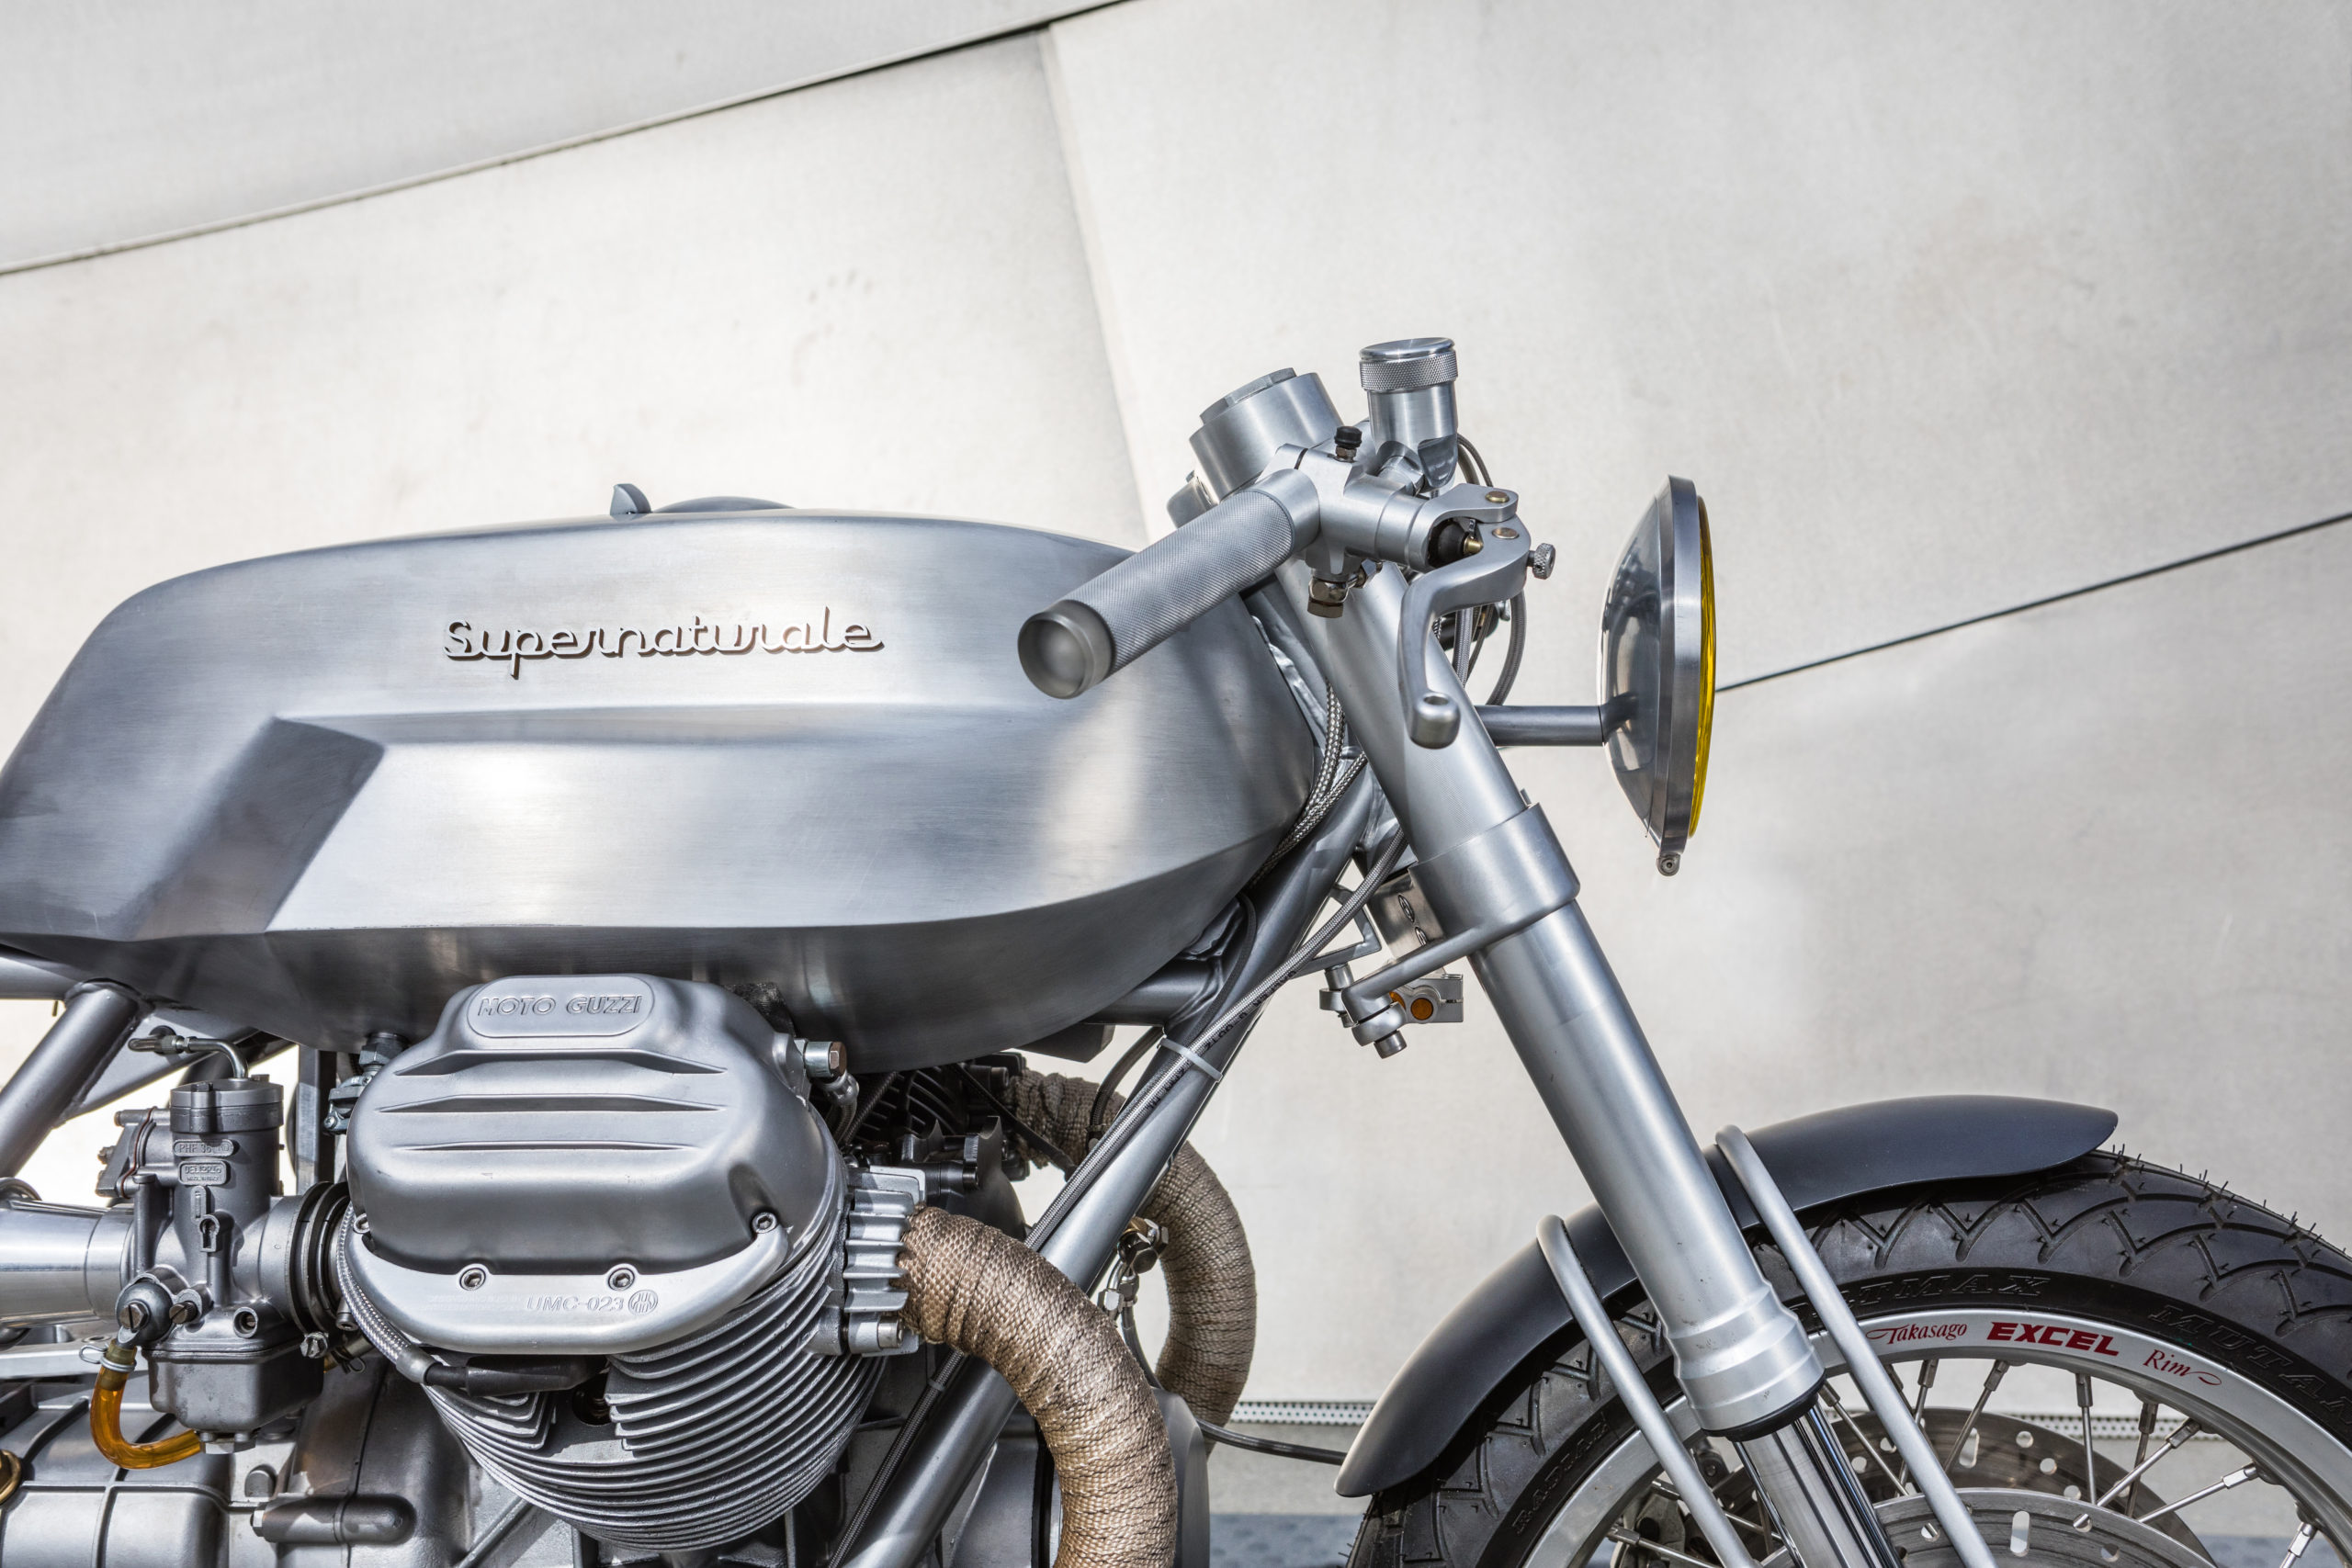 1975 Moto Guzzi 850T Supernaturale by Untitled Motorcycles